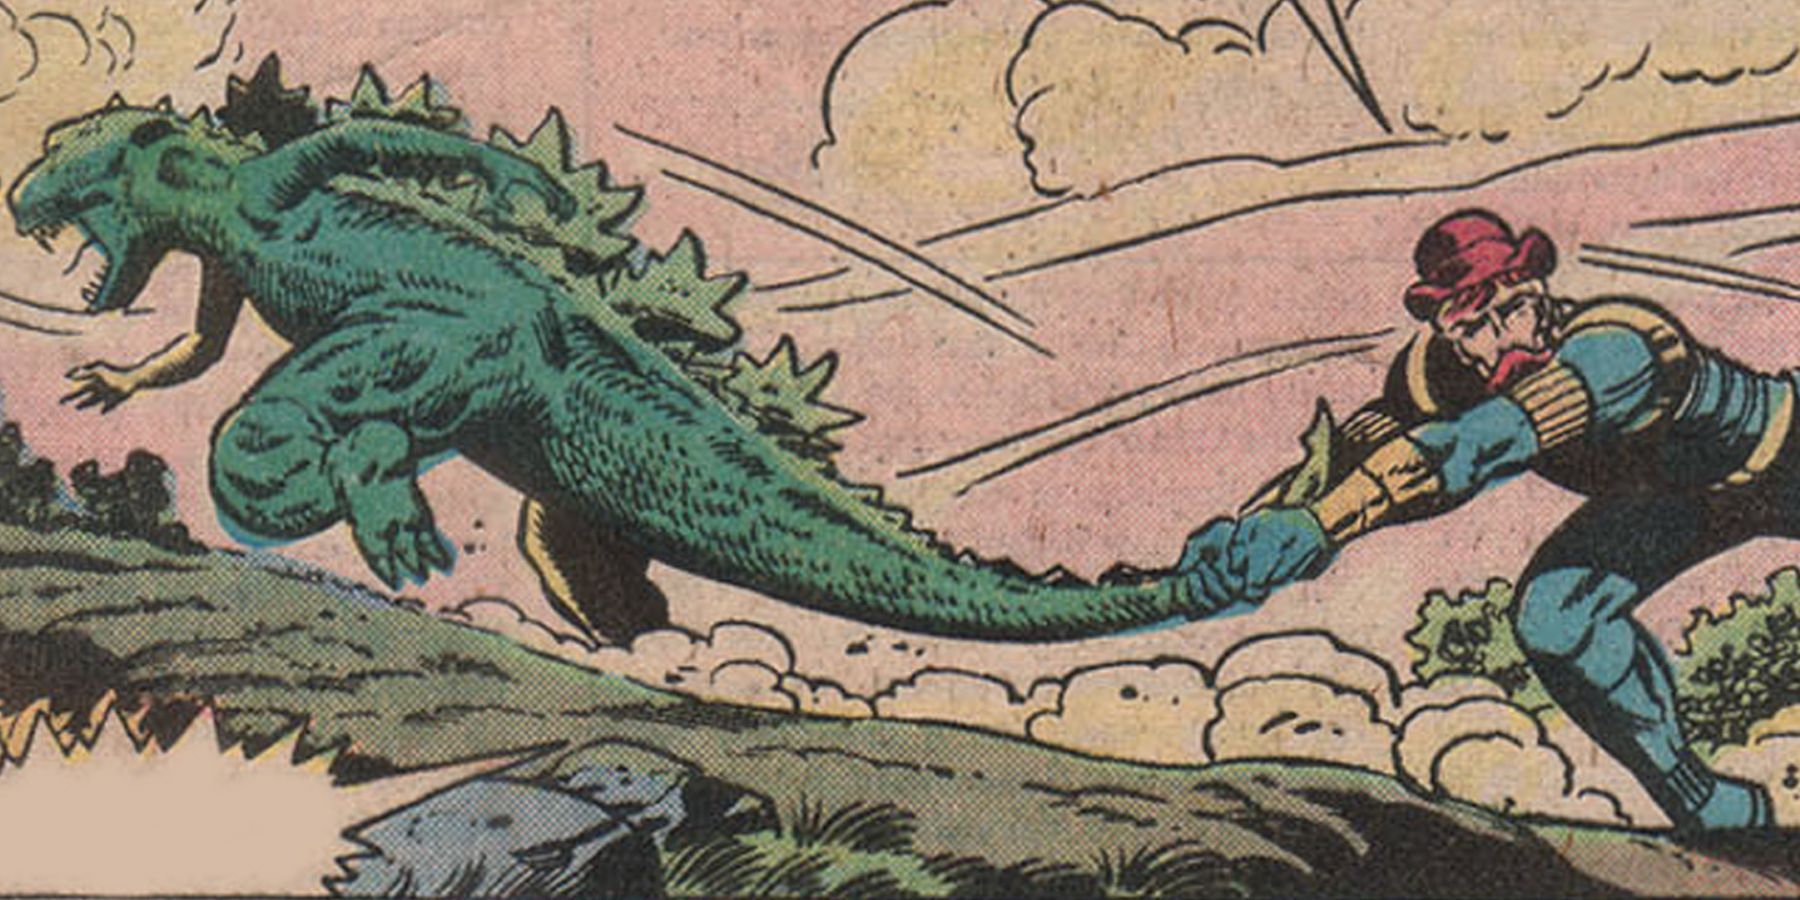 Dum Dum Dugan Holding Godzilla's Tail